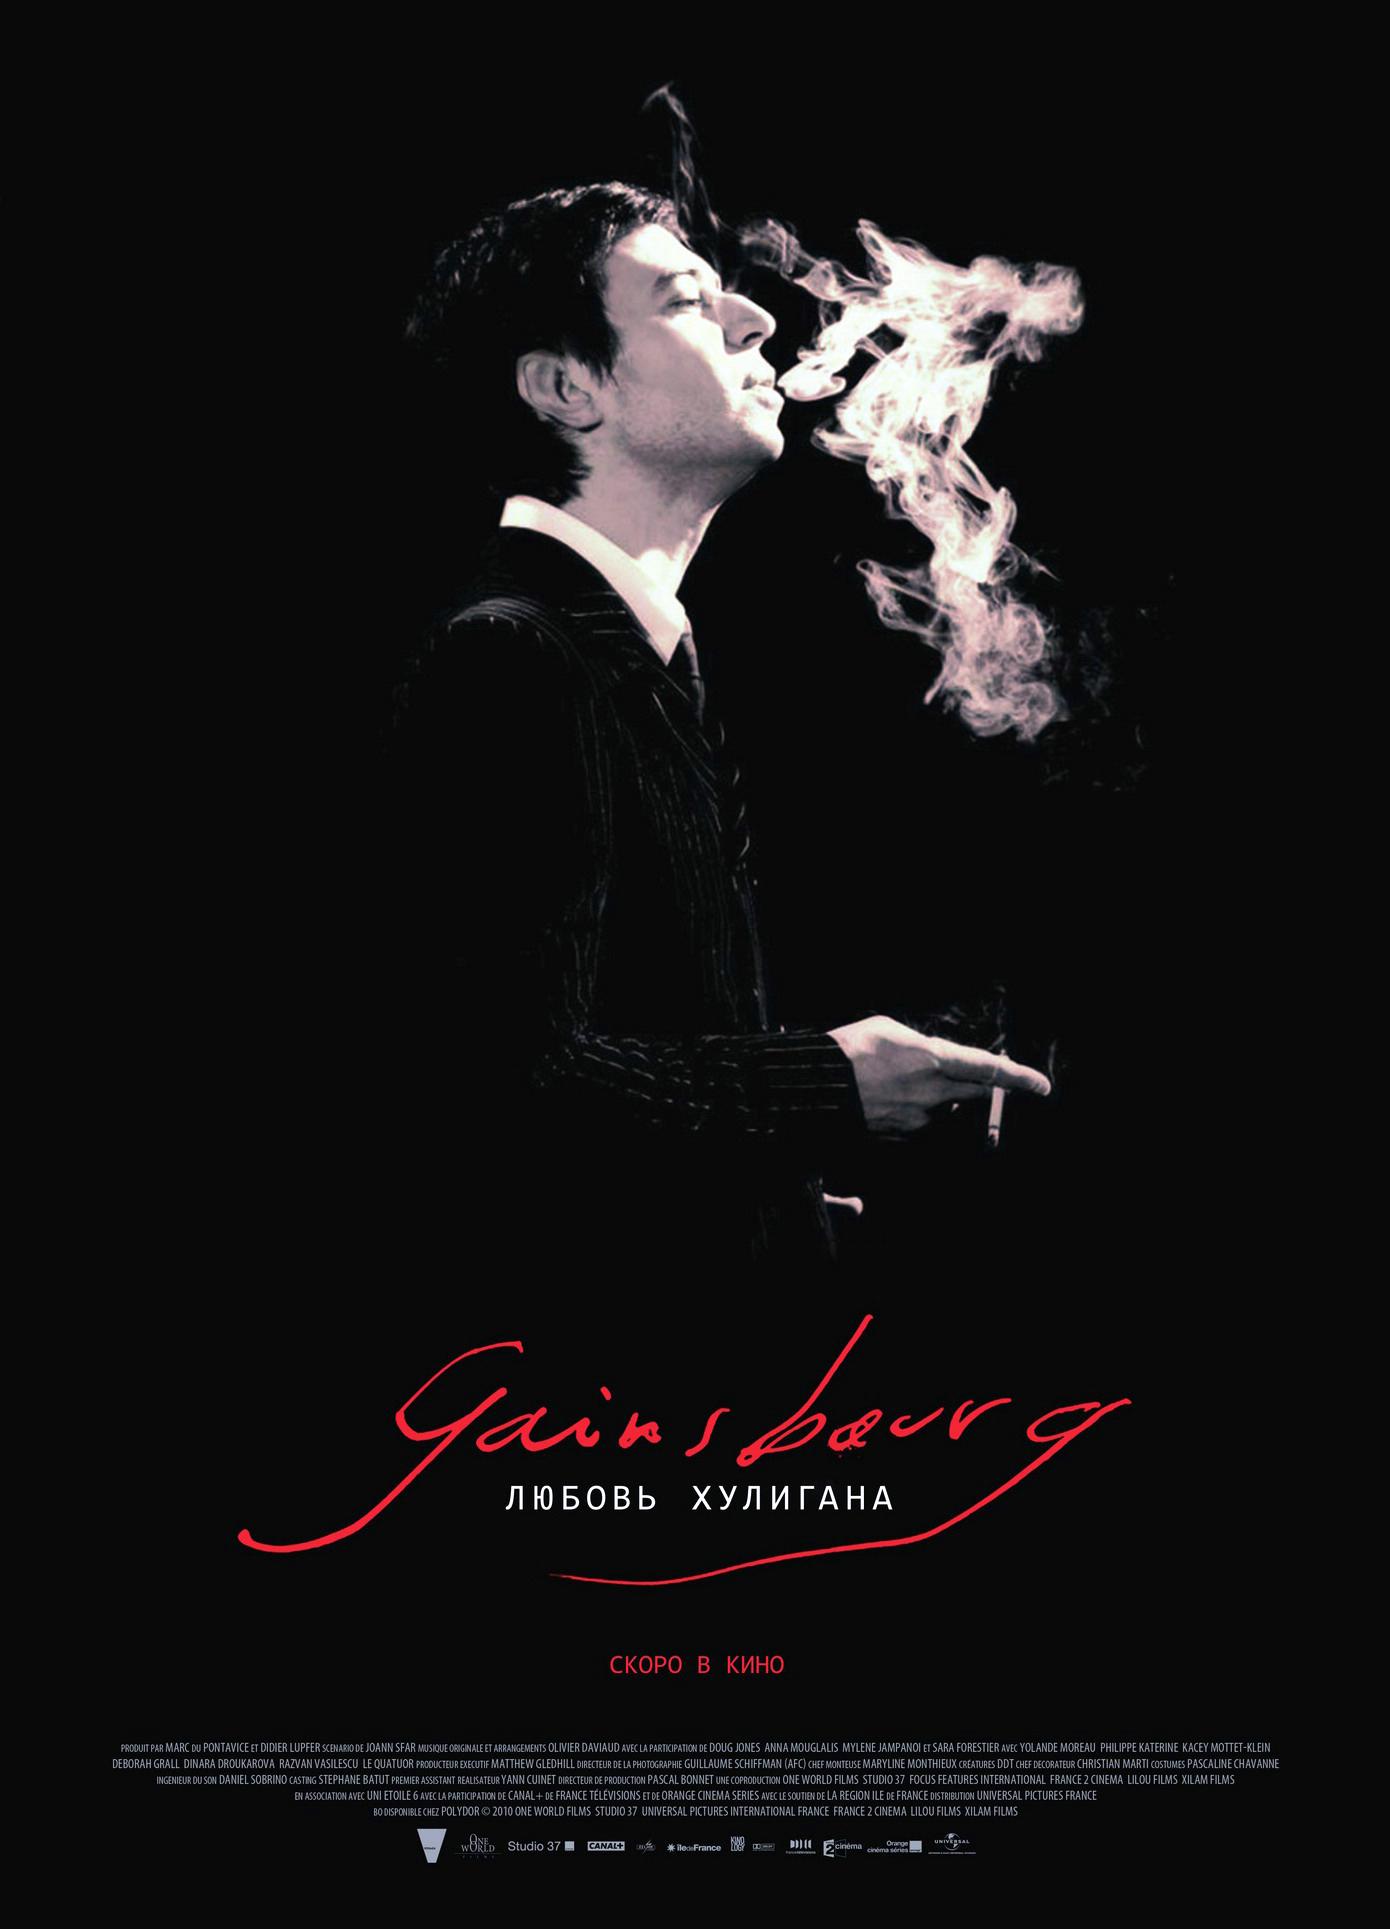 Постер фильма Генсбур. Любовь хулигана | Serge Gainsbourg, vie heroique